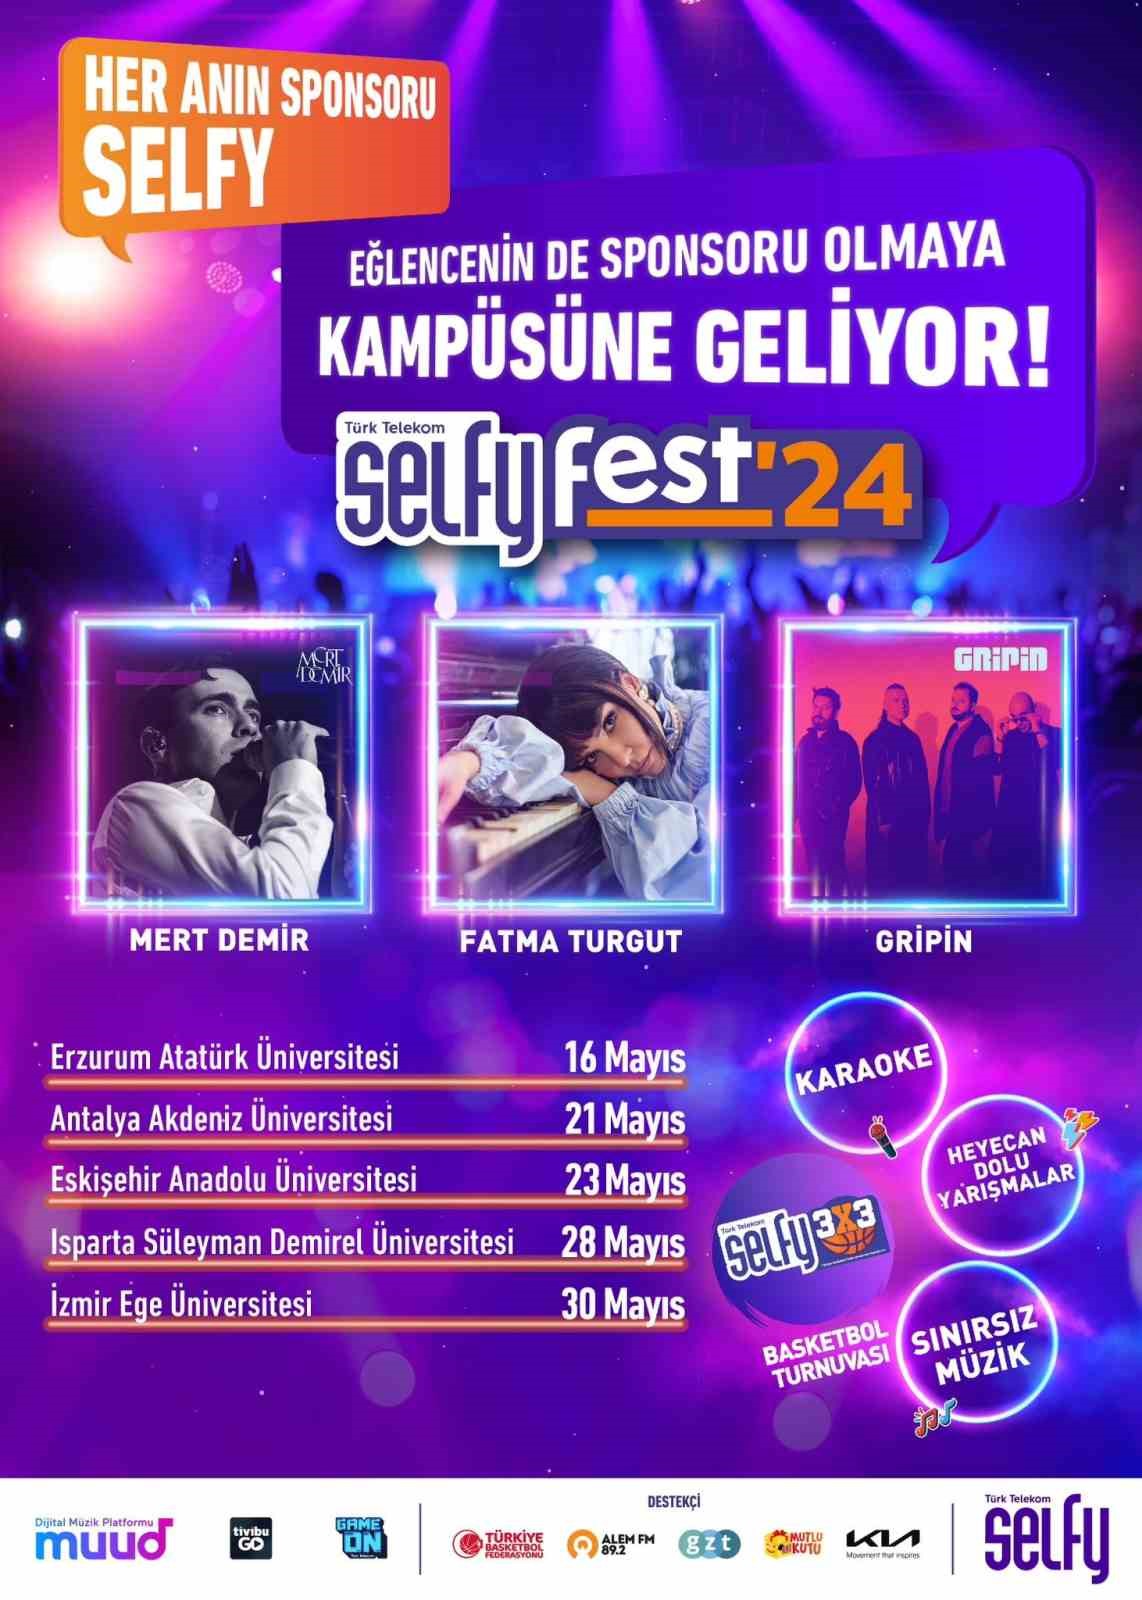 turk telekomun genclik markasi selfy ile kampuslerde festival basliyor 0 NyqsI6yO